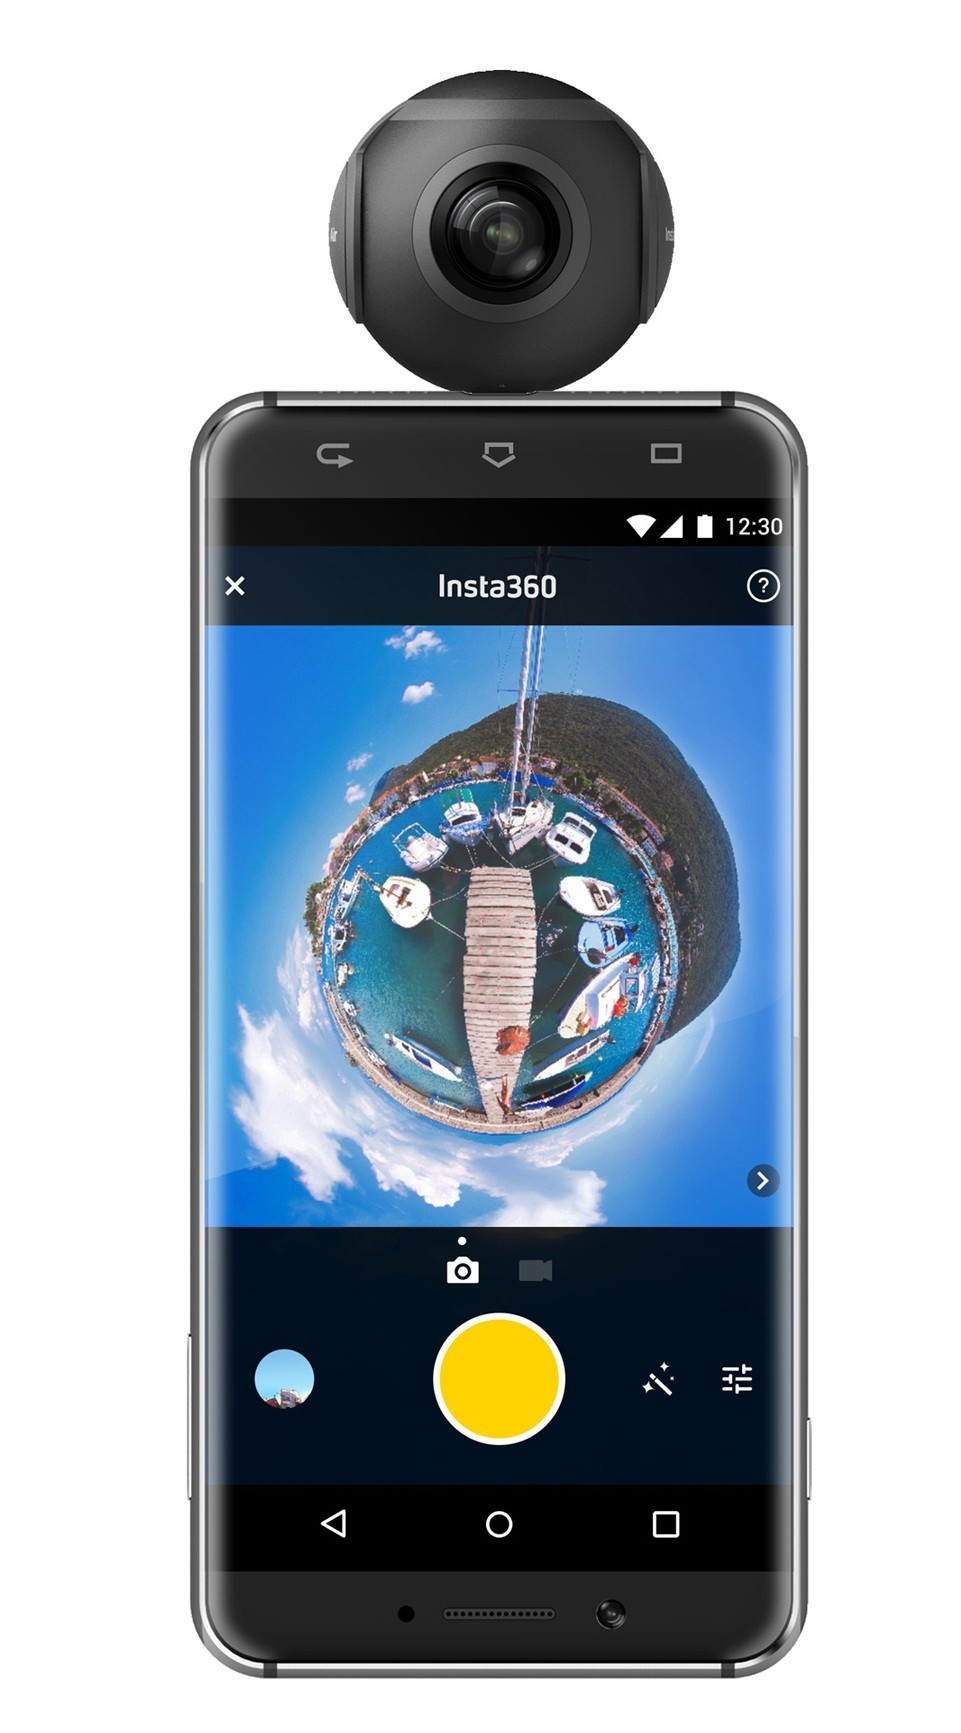 Androidスマートフォンに接続できる360度カメラ